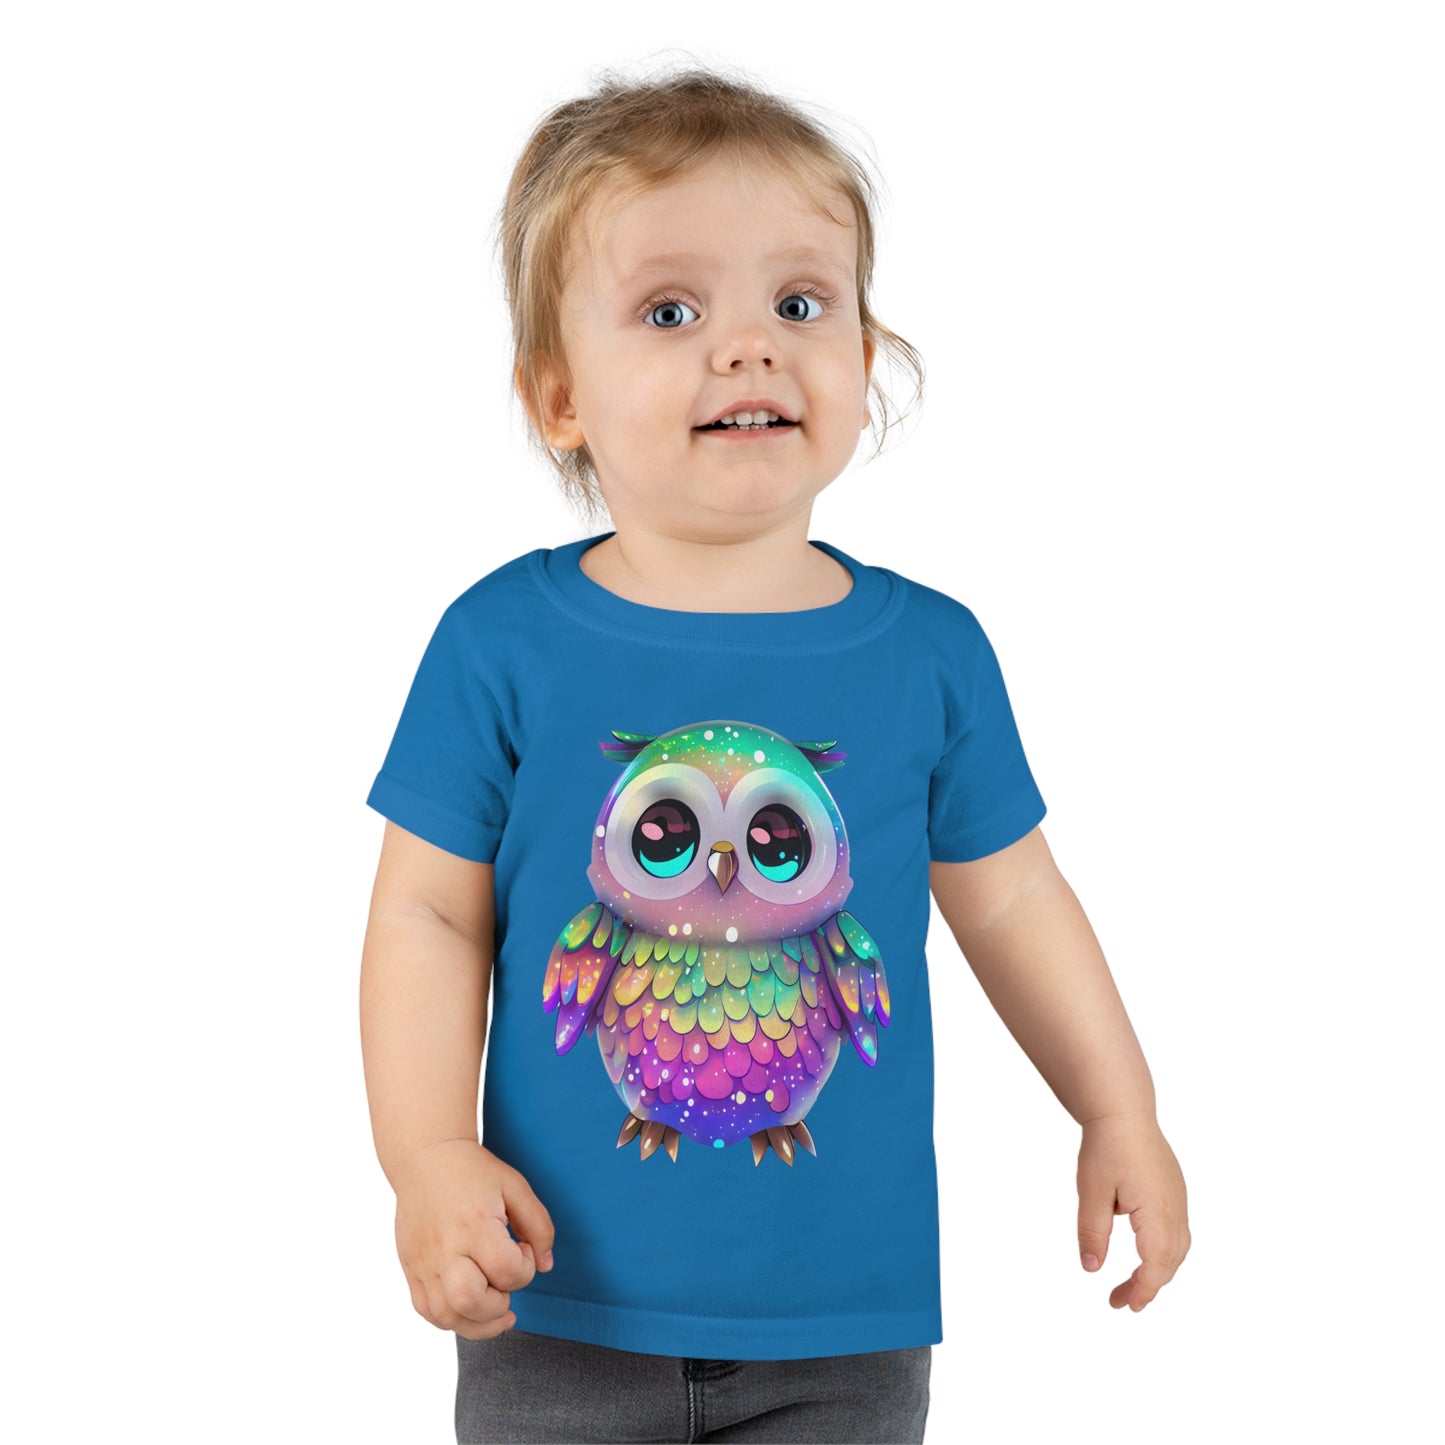 Iridescent Rainbow Owl Toddler T-shirt, Sizes 2T-6T